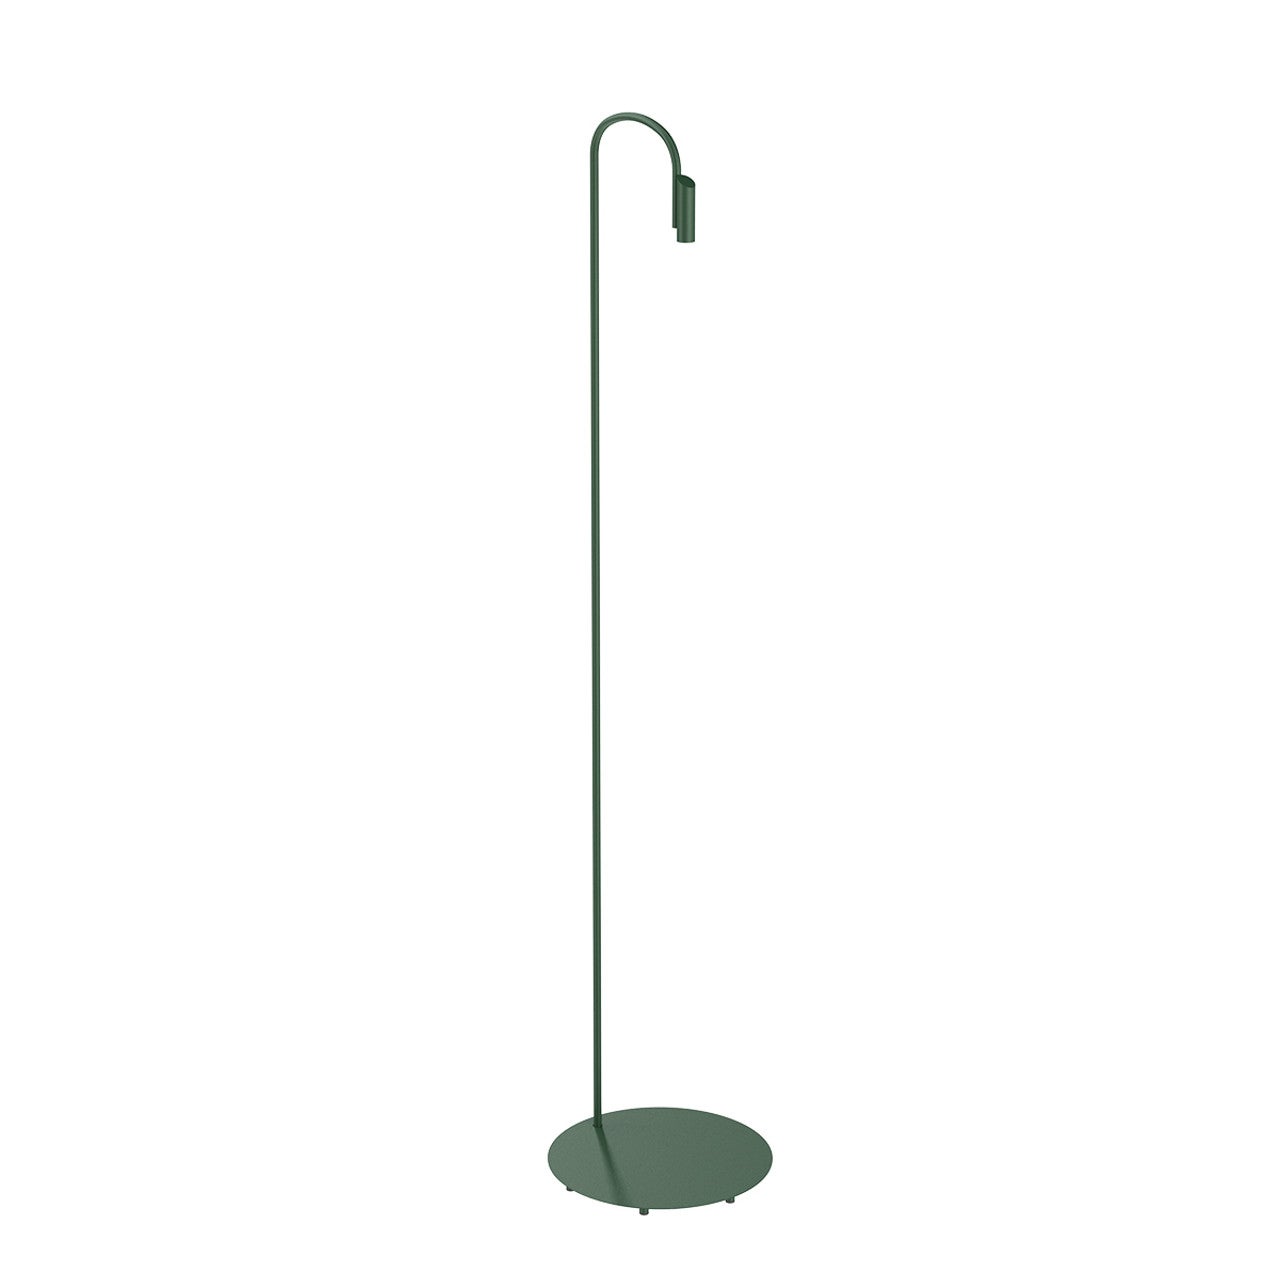 Flos Caule 3000K Model 5 Outdoor Floor Lamp in Forest Green with Regular Shade